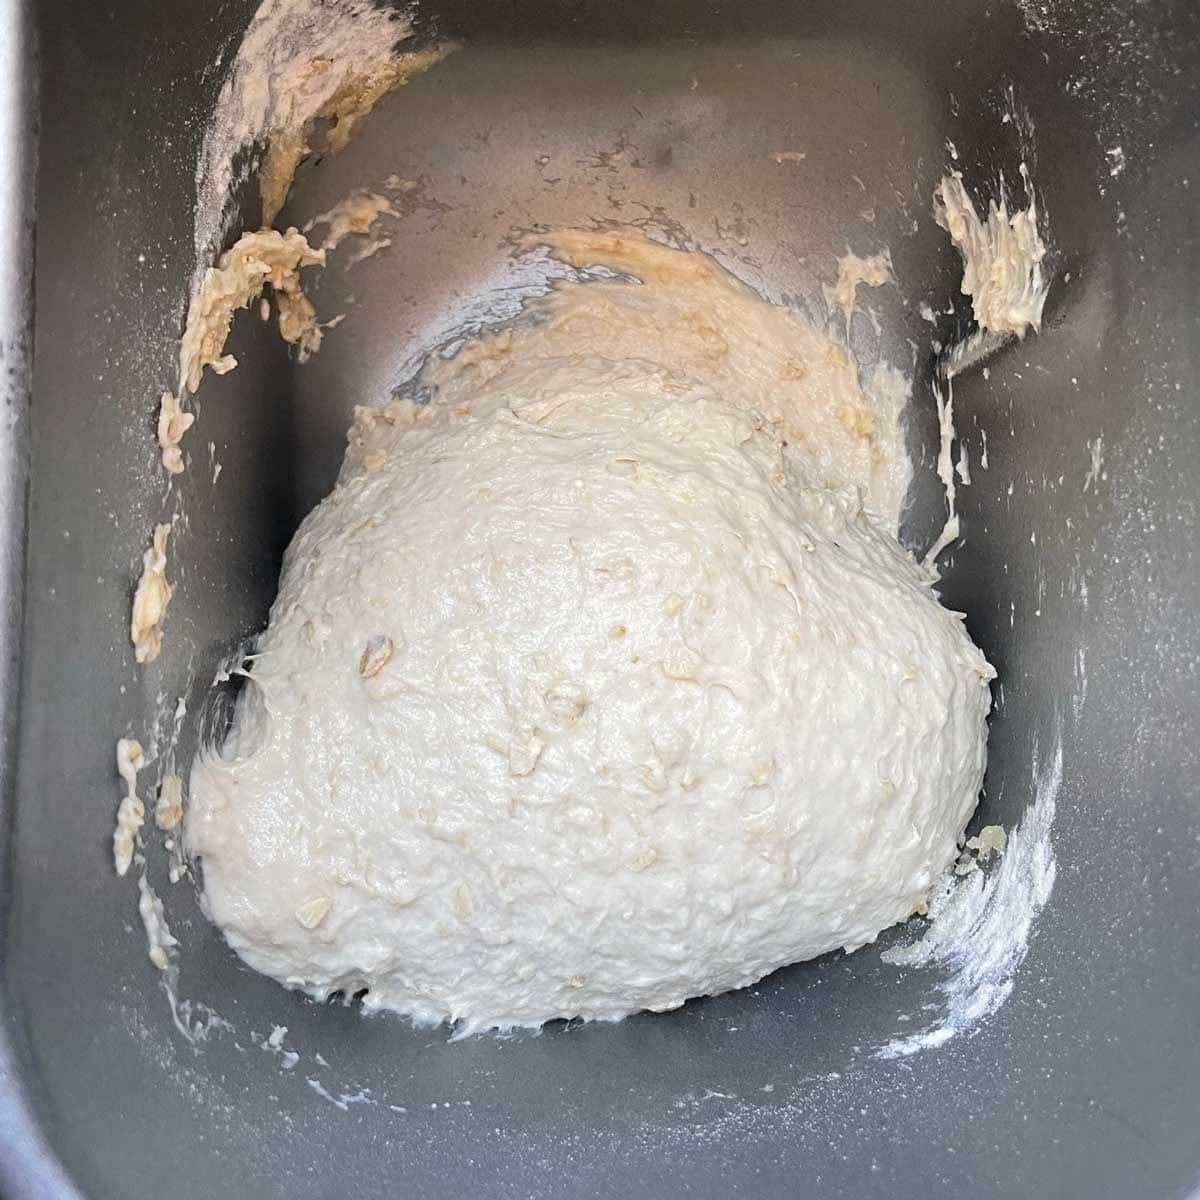 Oatmeal bread dough in bread machine pan.